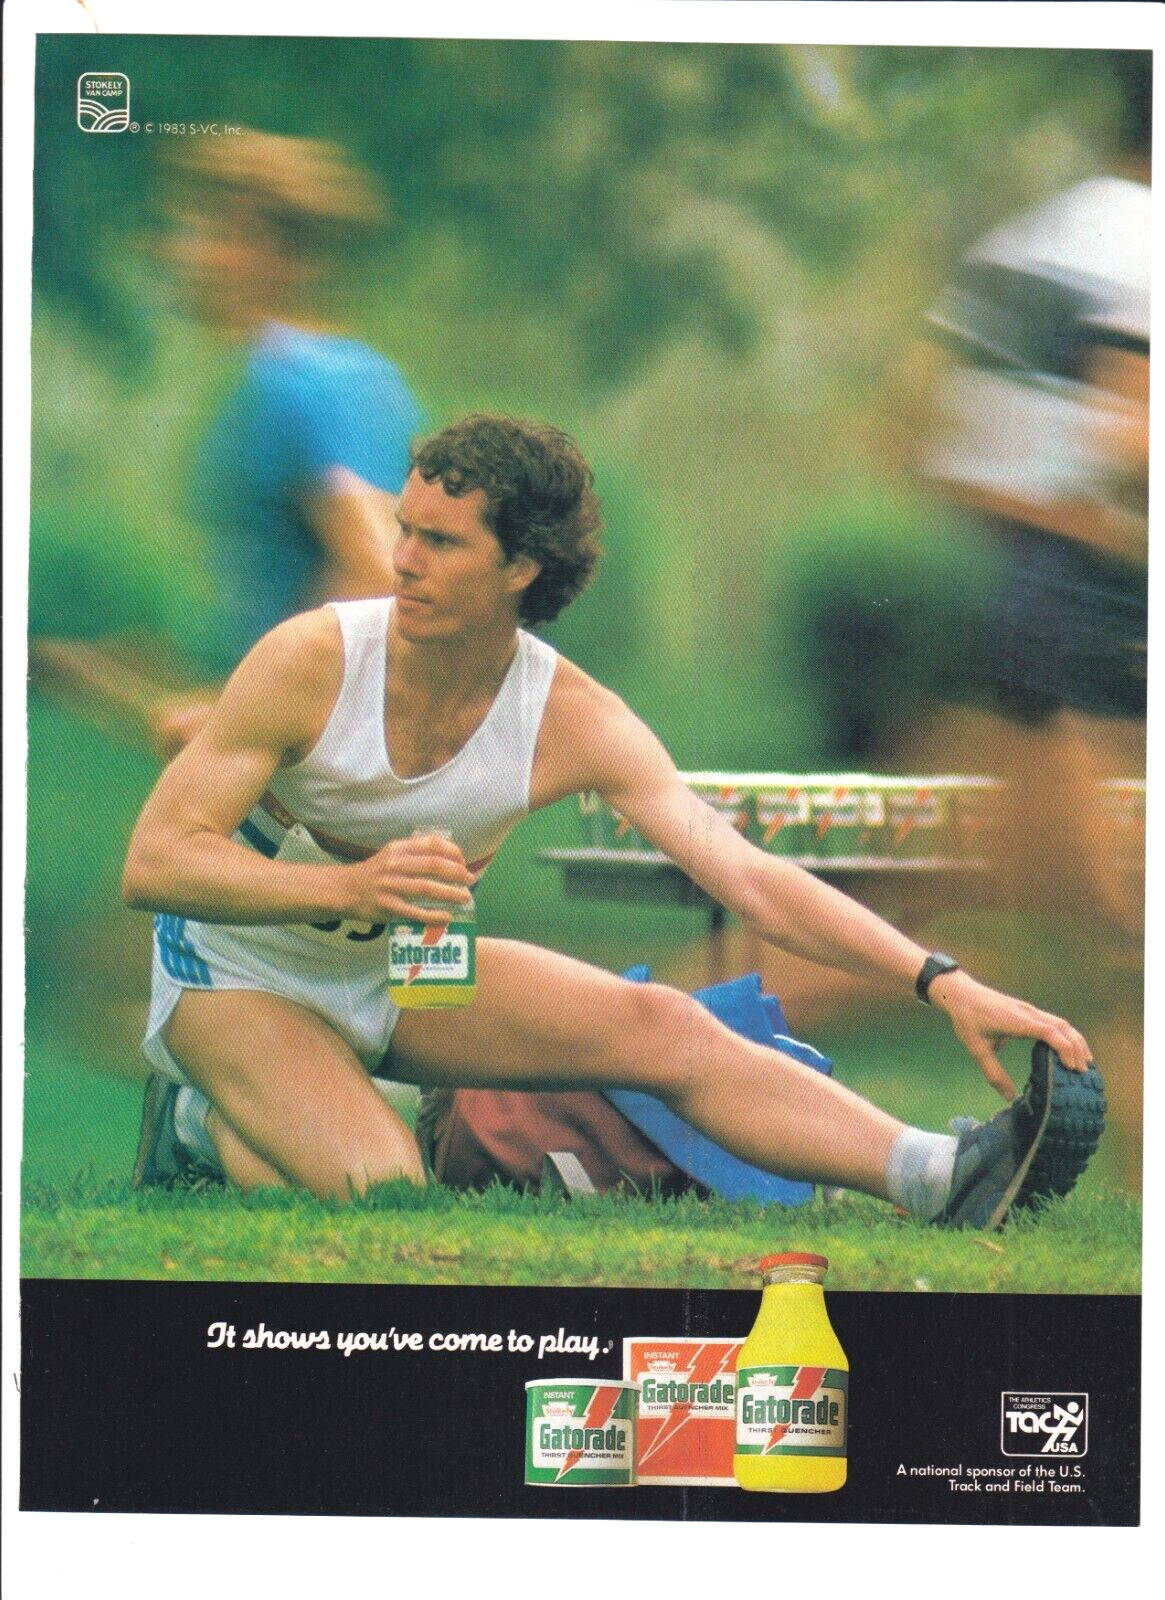 Gatorade 1984 Print Ad 8\